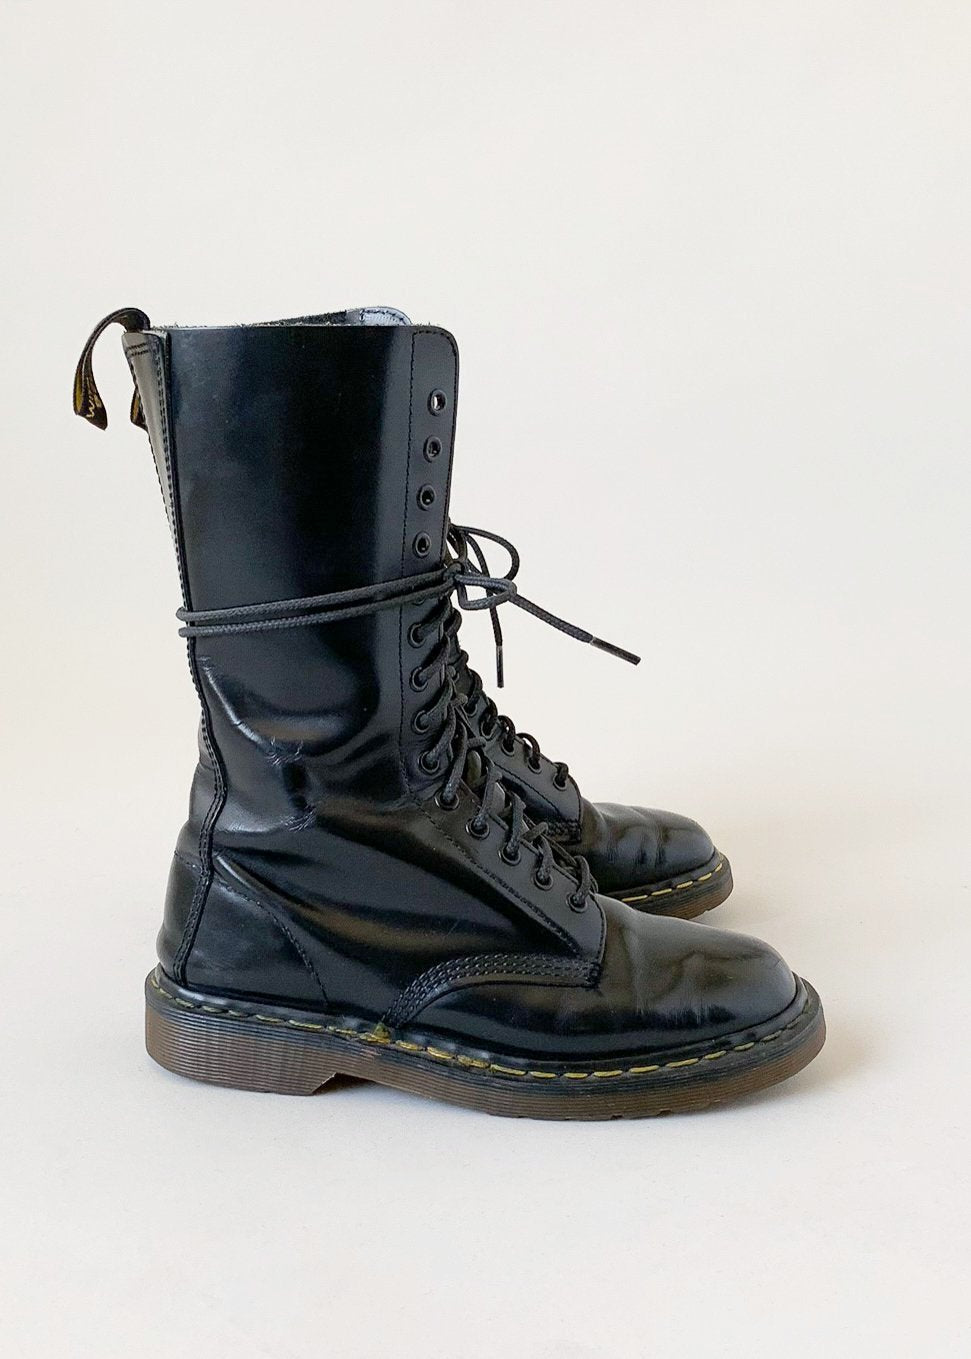 Vintage 1990s Doc Marten Boots - Raleigh Vintage